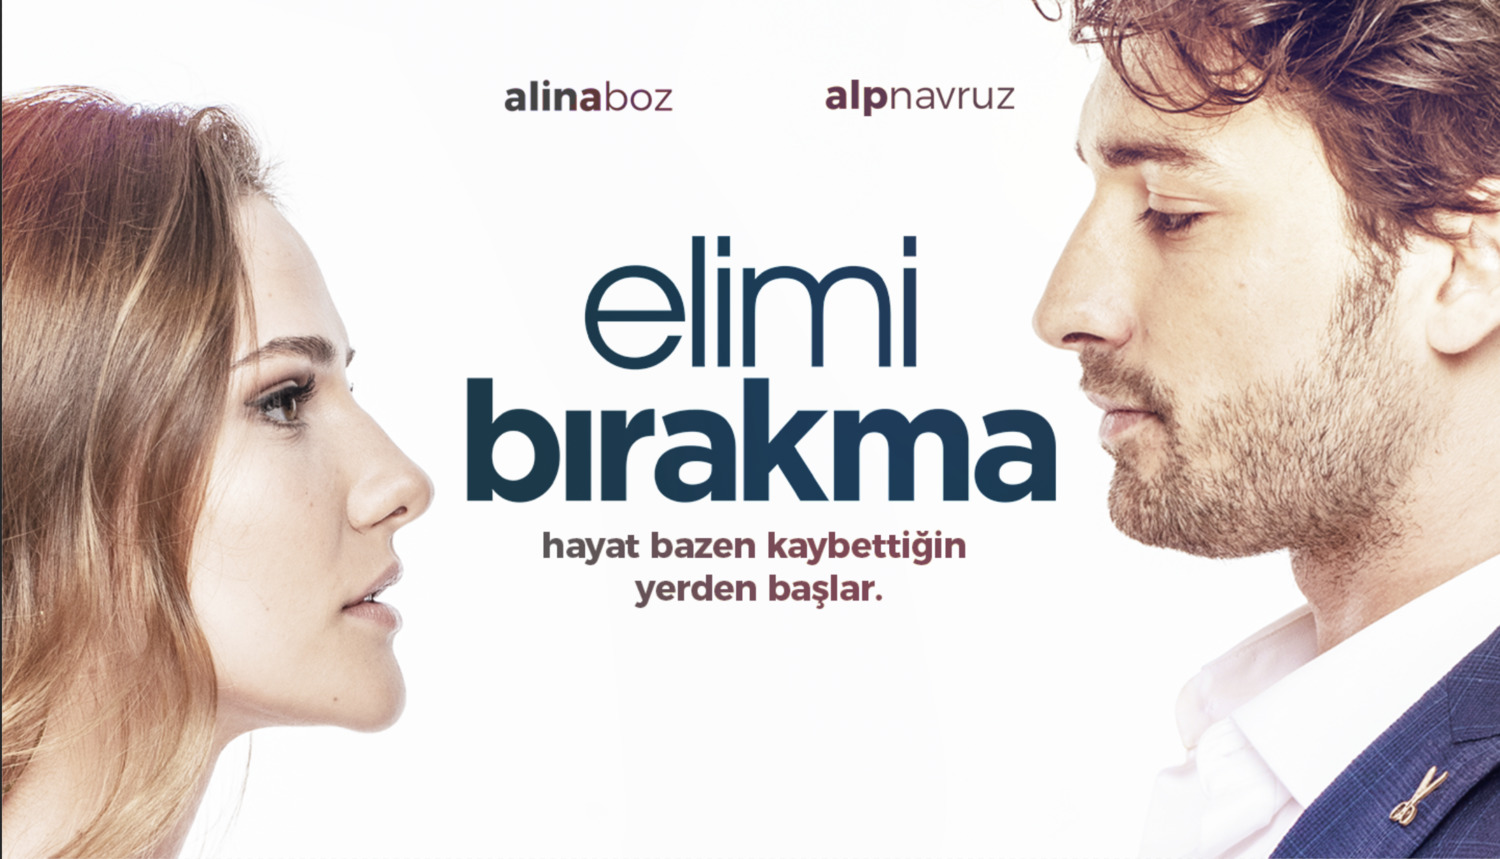 Extra Large TV Poster Image for Elimi birakma (#4 of 20)